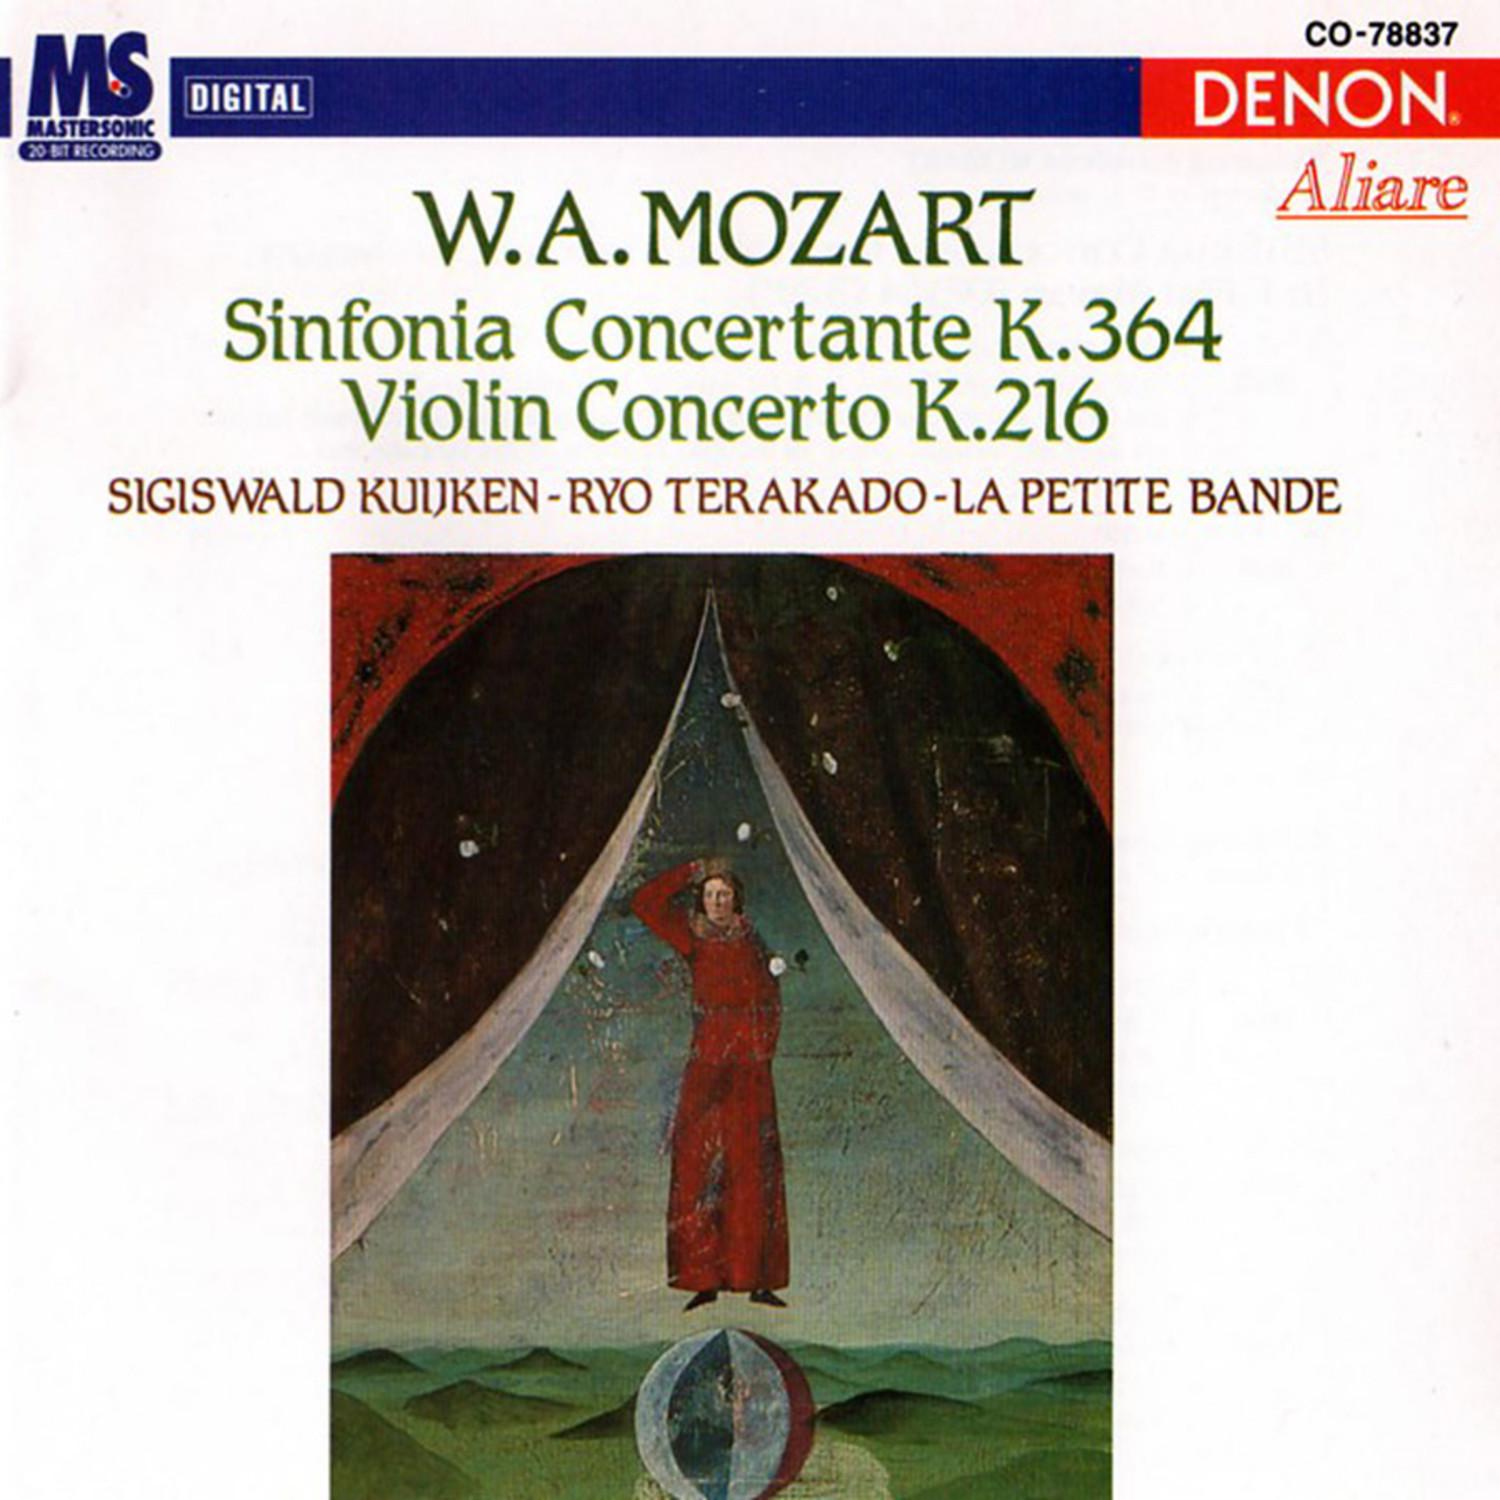 Concerto for Violin & Orchestra in G Major, K. 216: III. Rondeau : Allegro